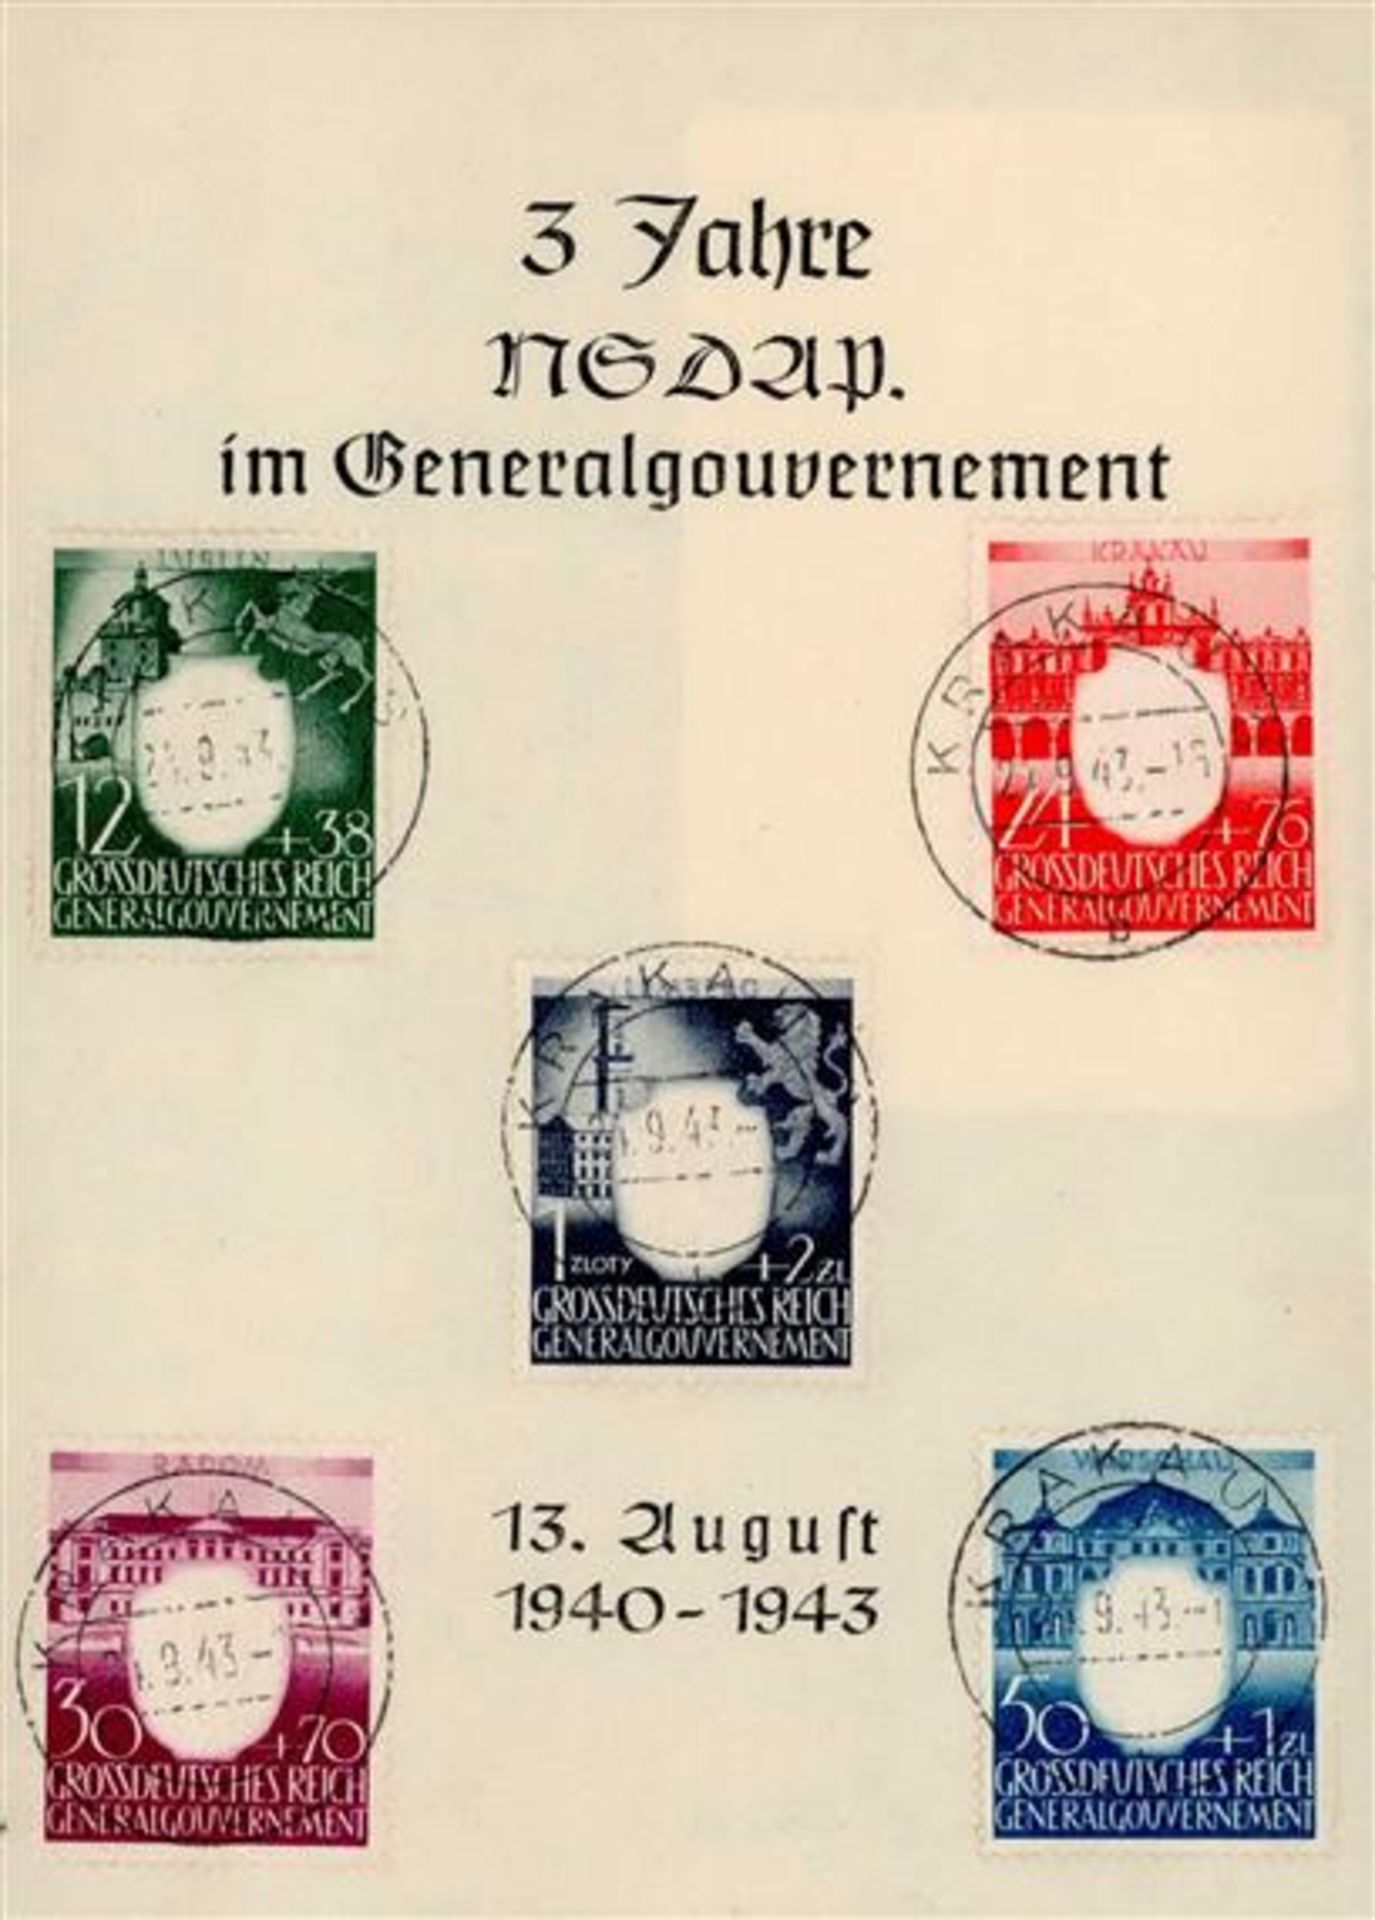 NS-GEDENKBLATT WK II - 3 Jahre NSDAP im GENERALGOUVERNEMENT o Krakau 1943 - selbst gefertigt I-II